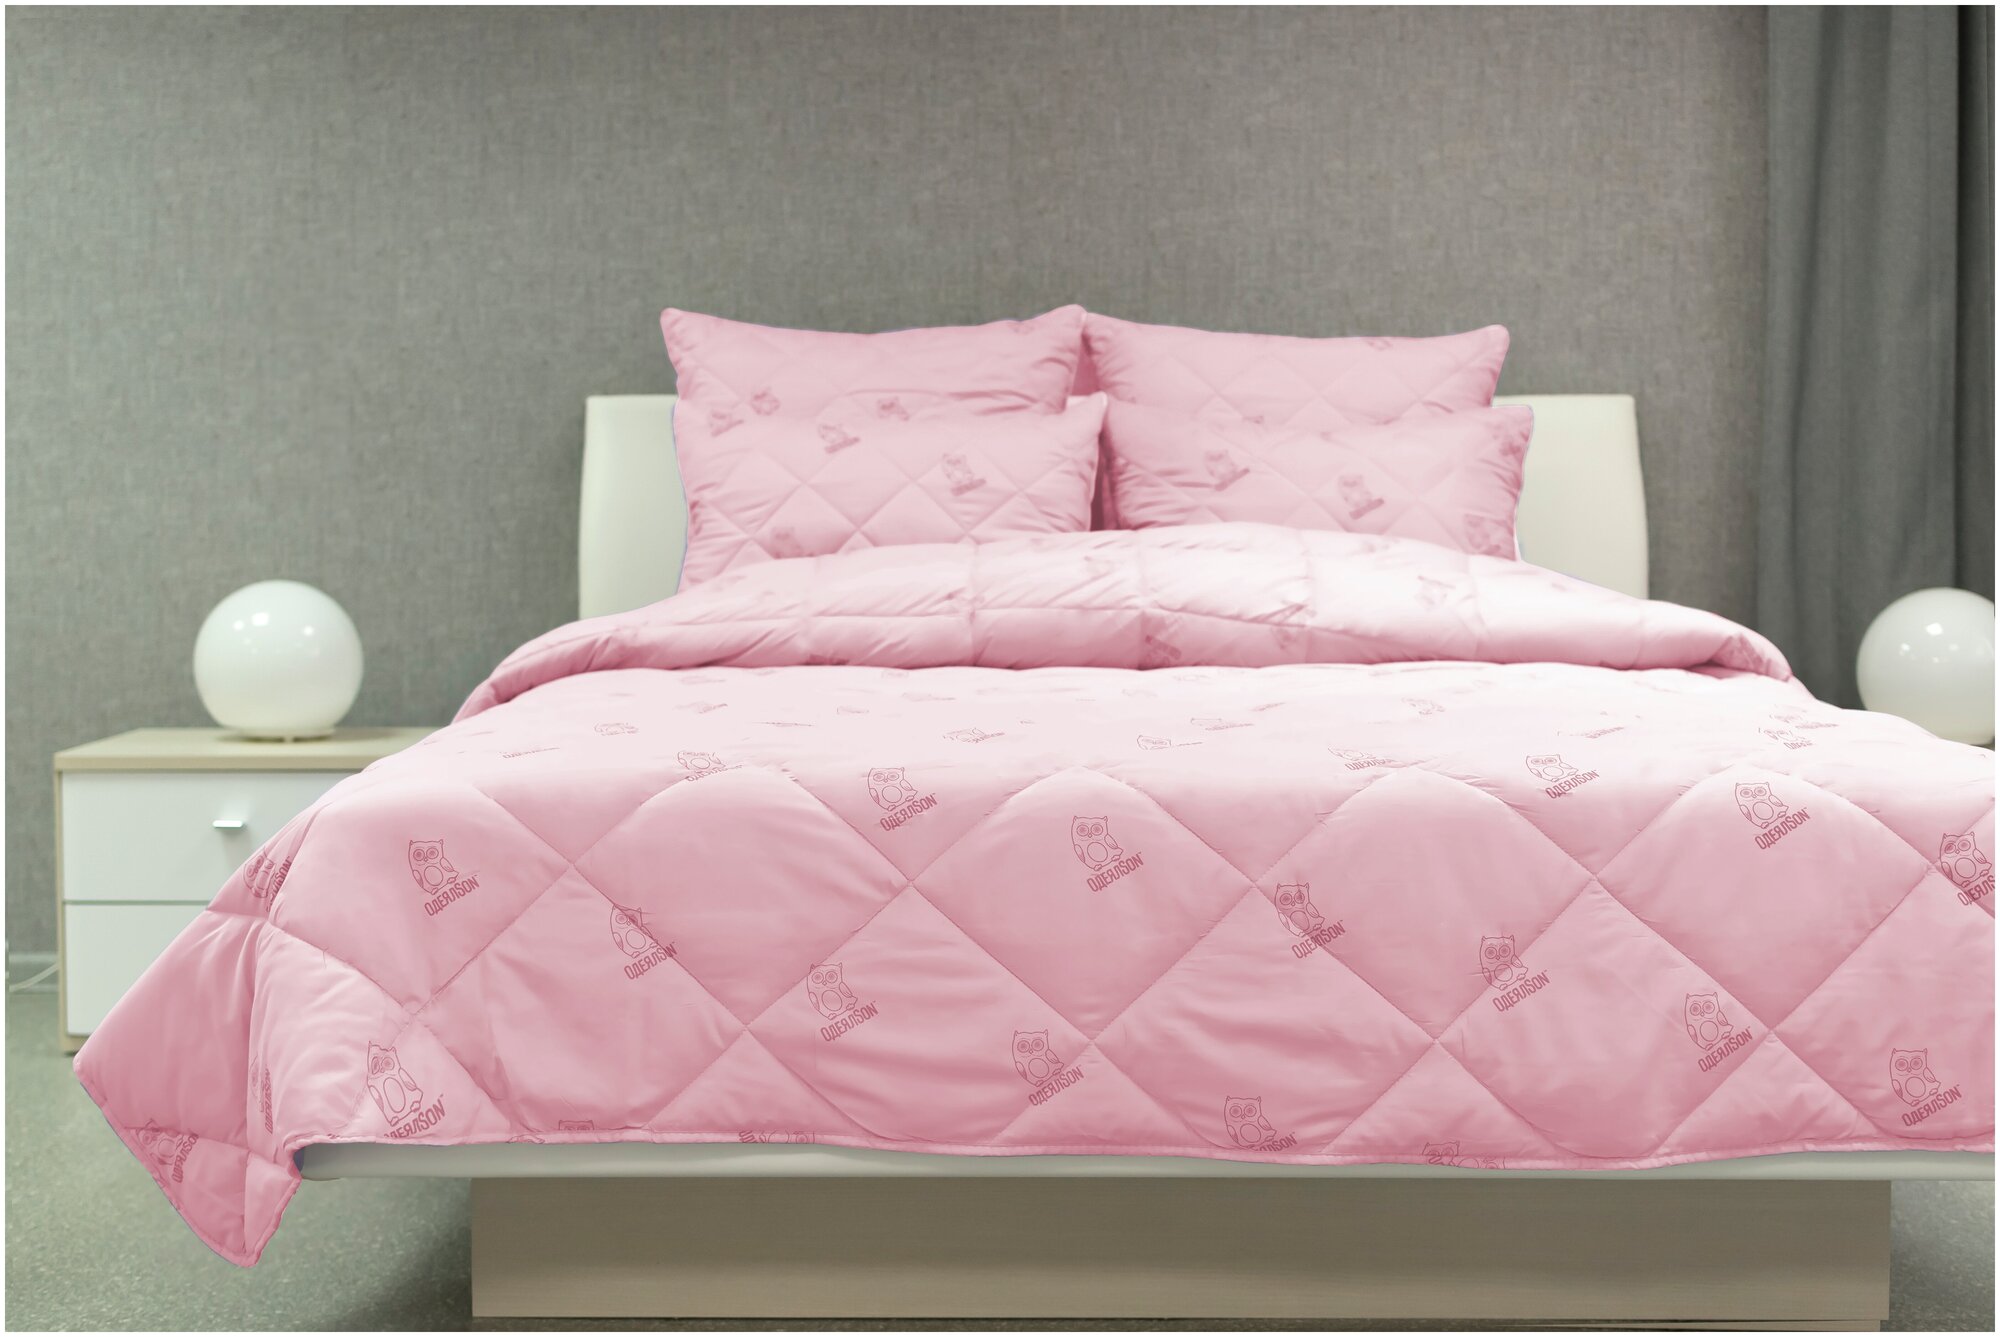 Одеяло розовое Стеганое 1,5 140х205 ТМ "ОдеялSon" серия Сова / Мягкий сон / в подарок - фотография № 8